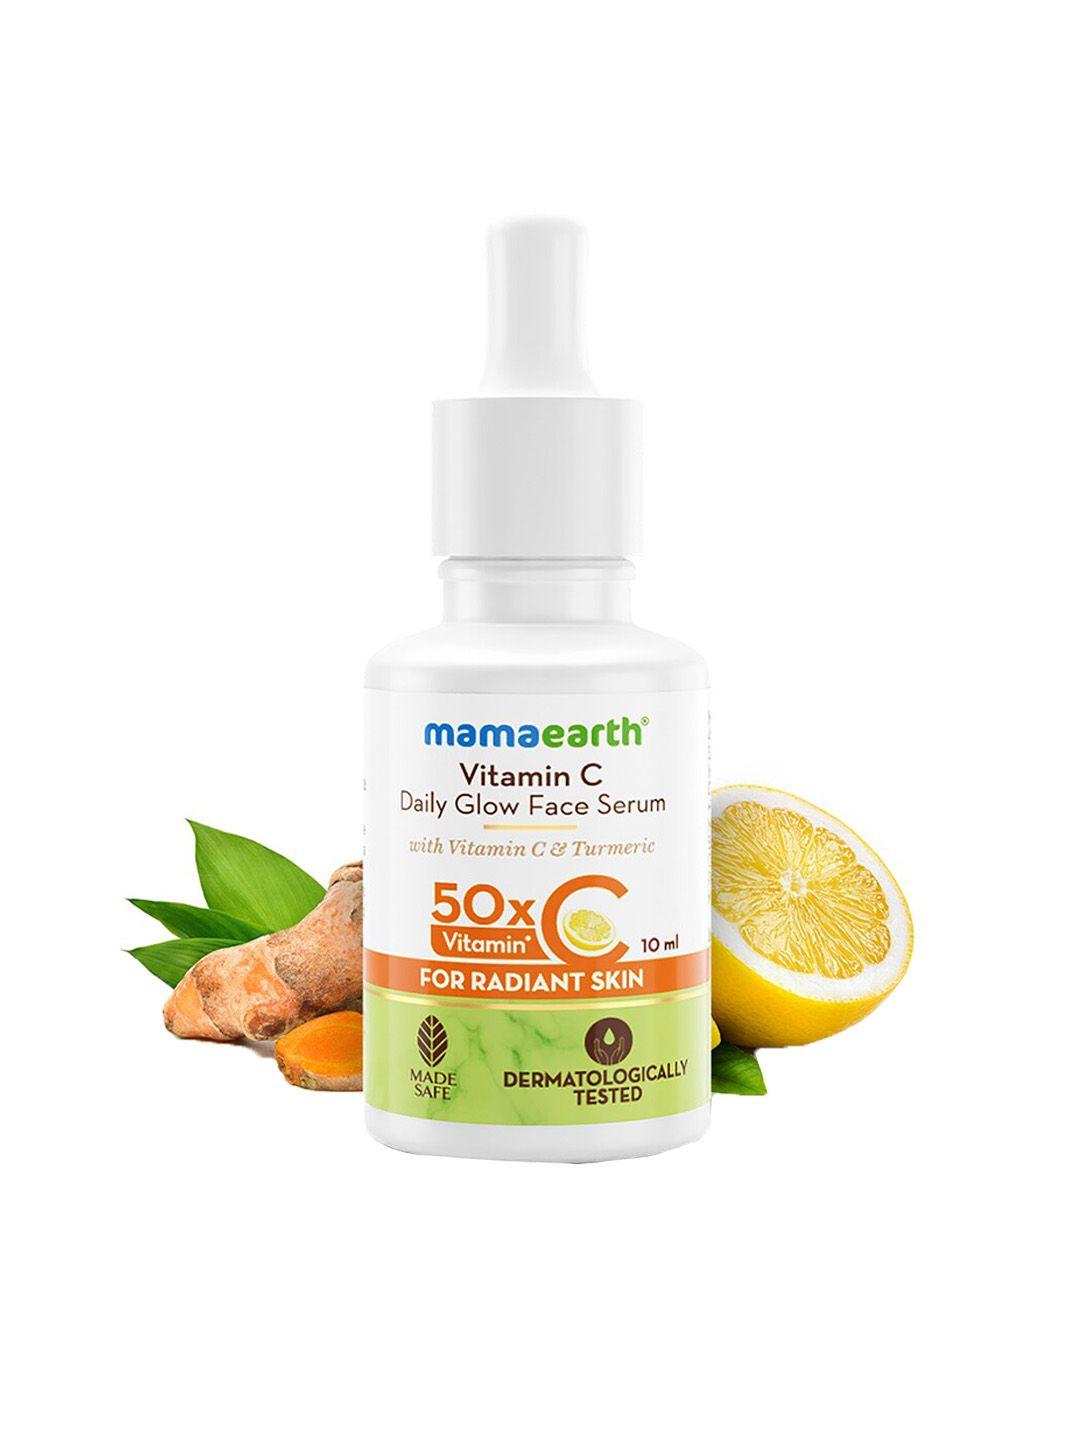 mamaearth vitamin c daily glow face serum with turmeric - 10 ml